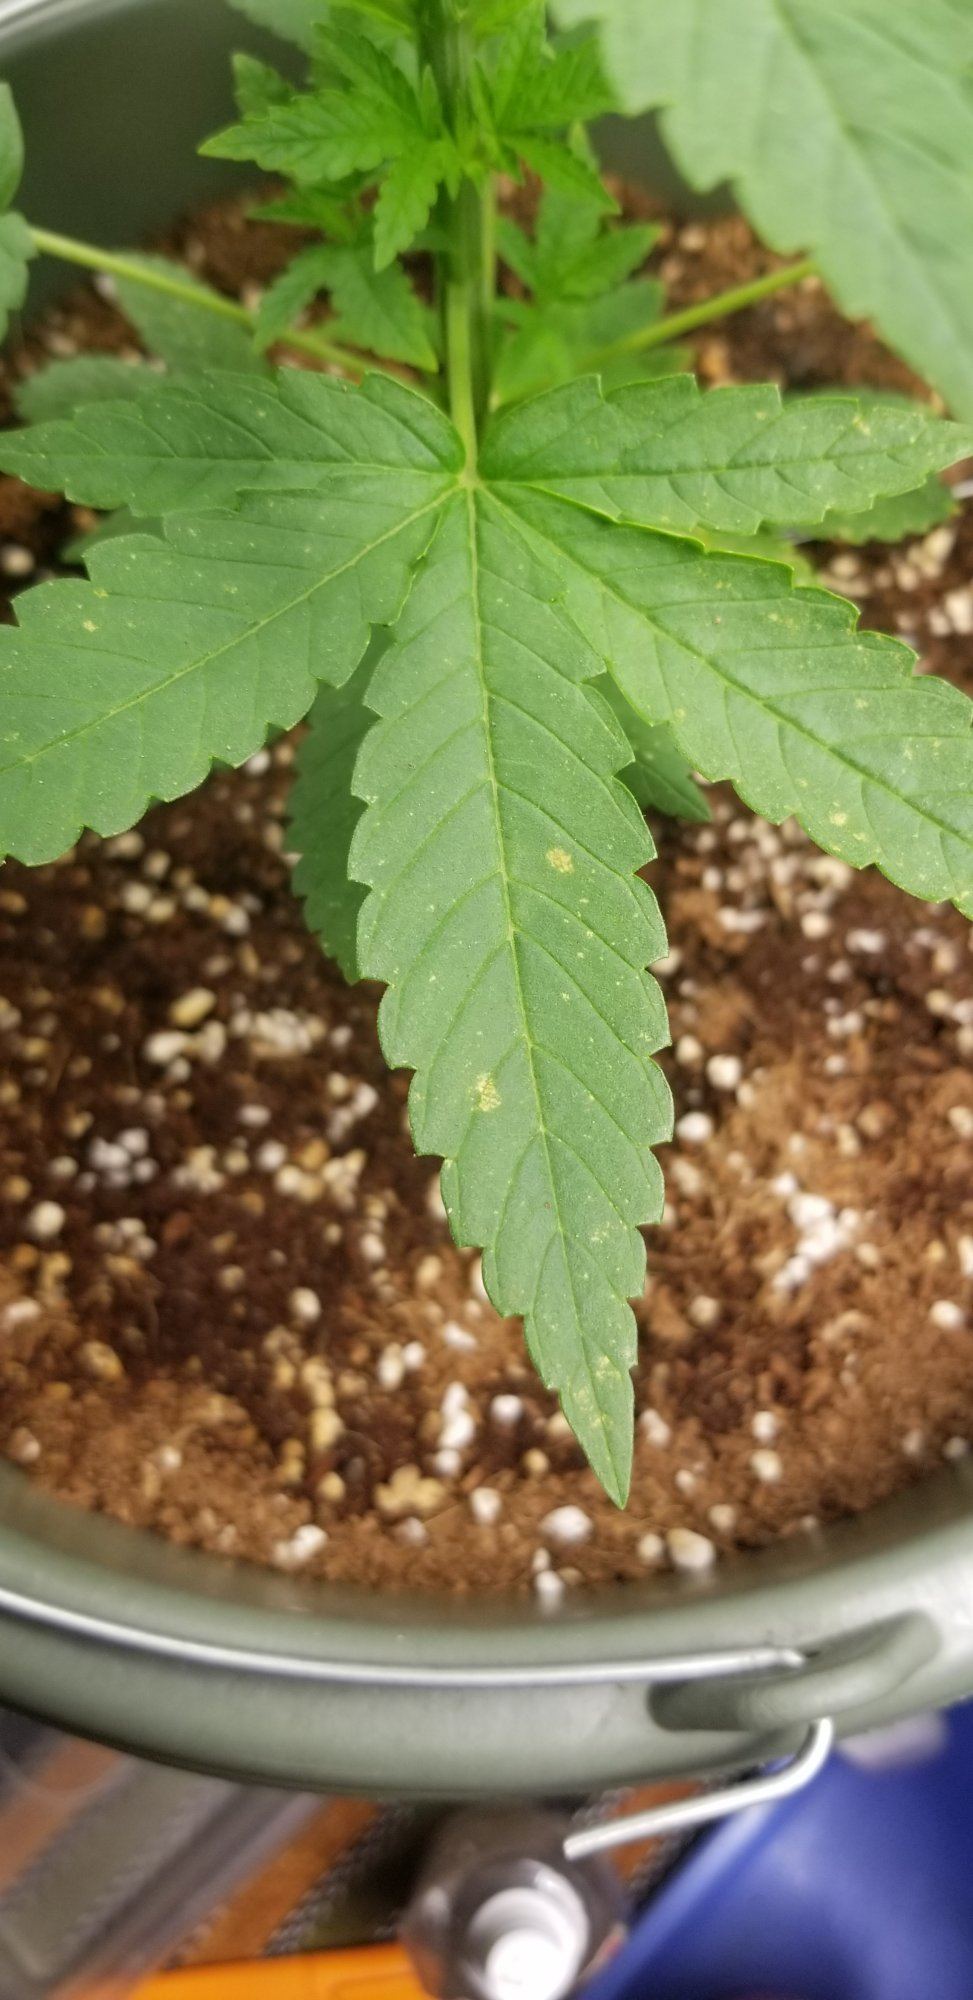 Strange spots on leaves 2